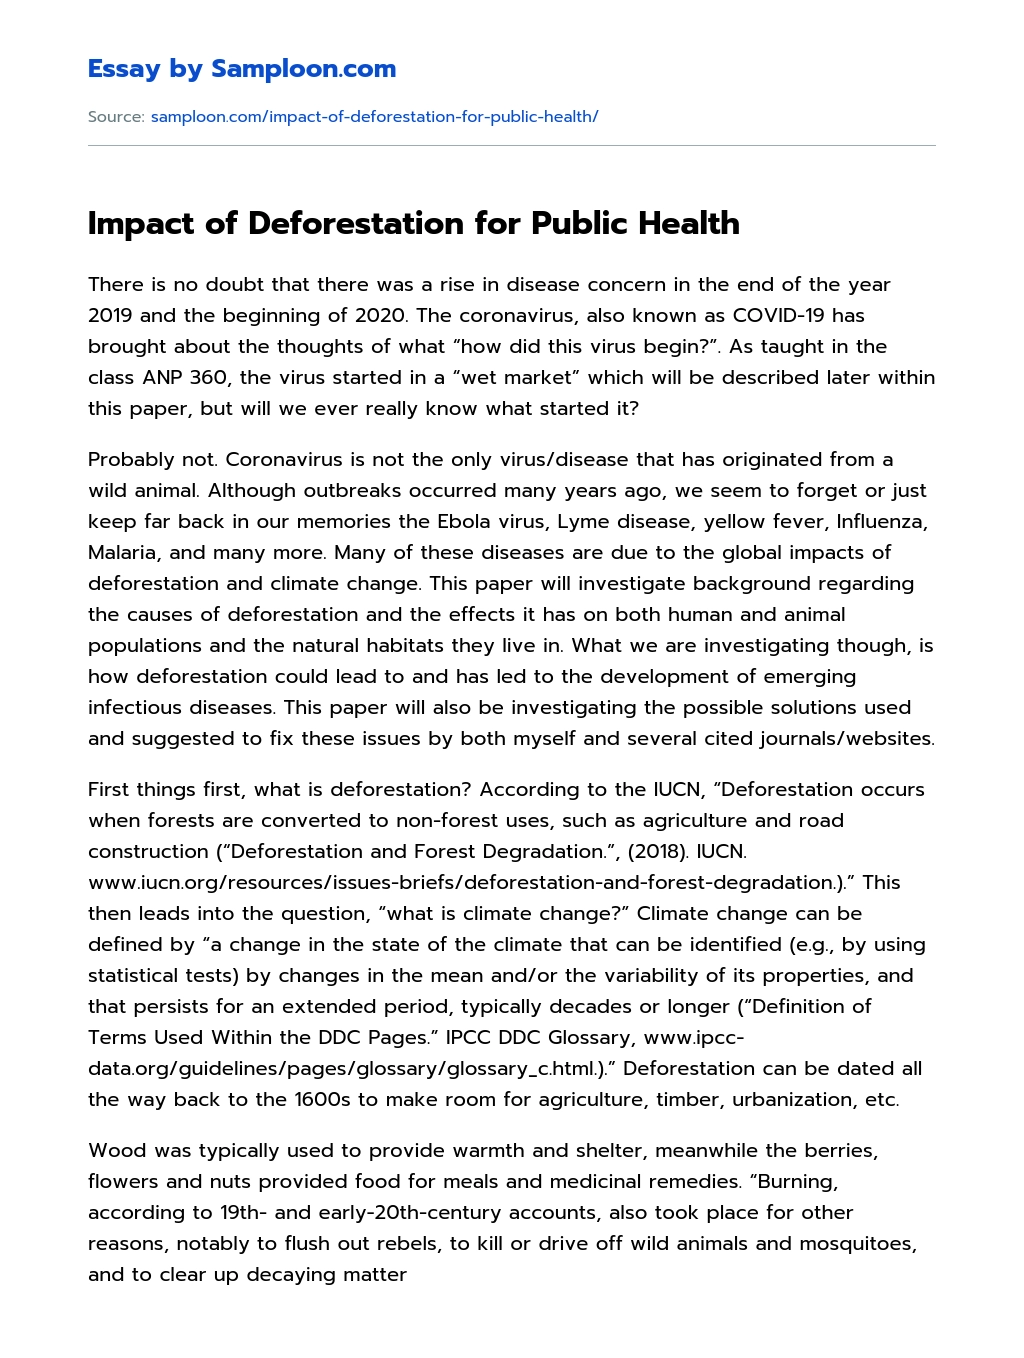 Impact of Deforestation for Public Health essay